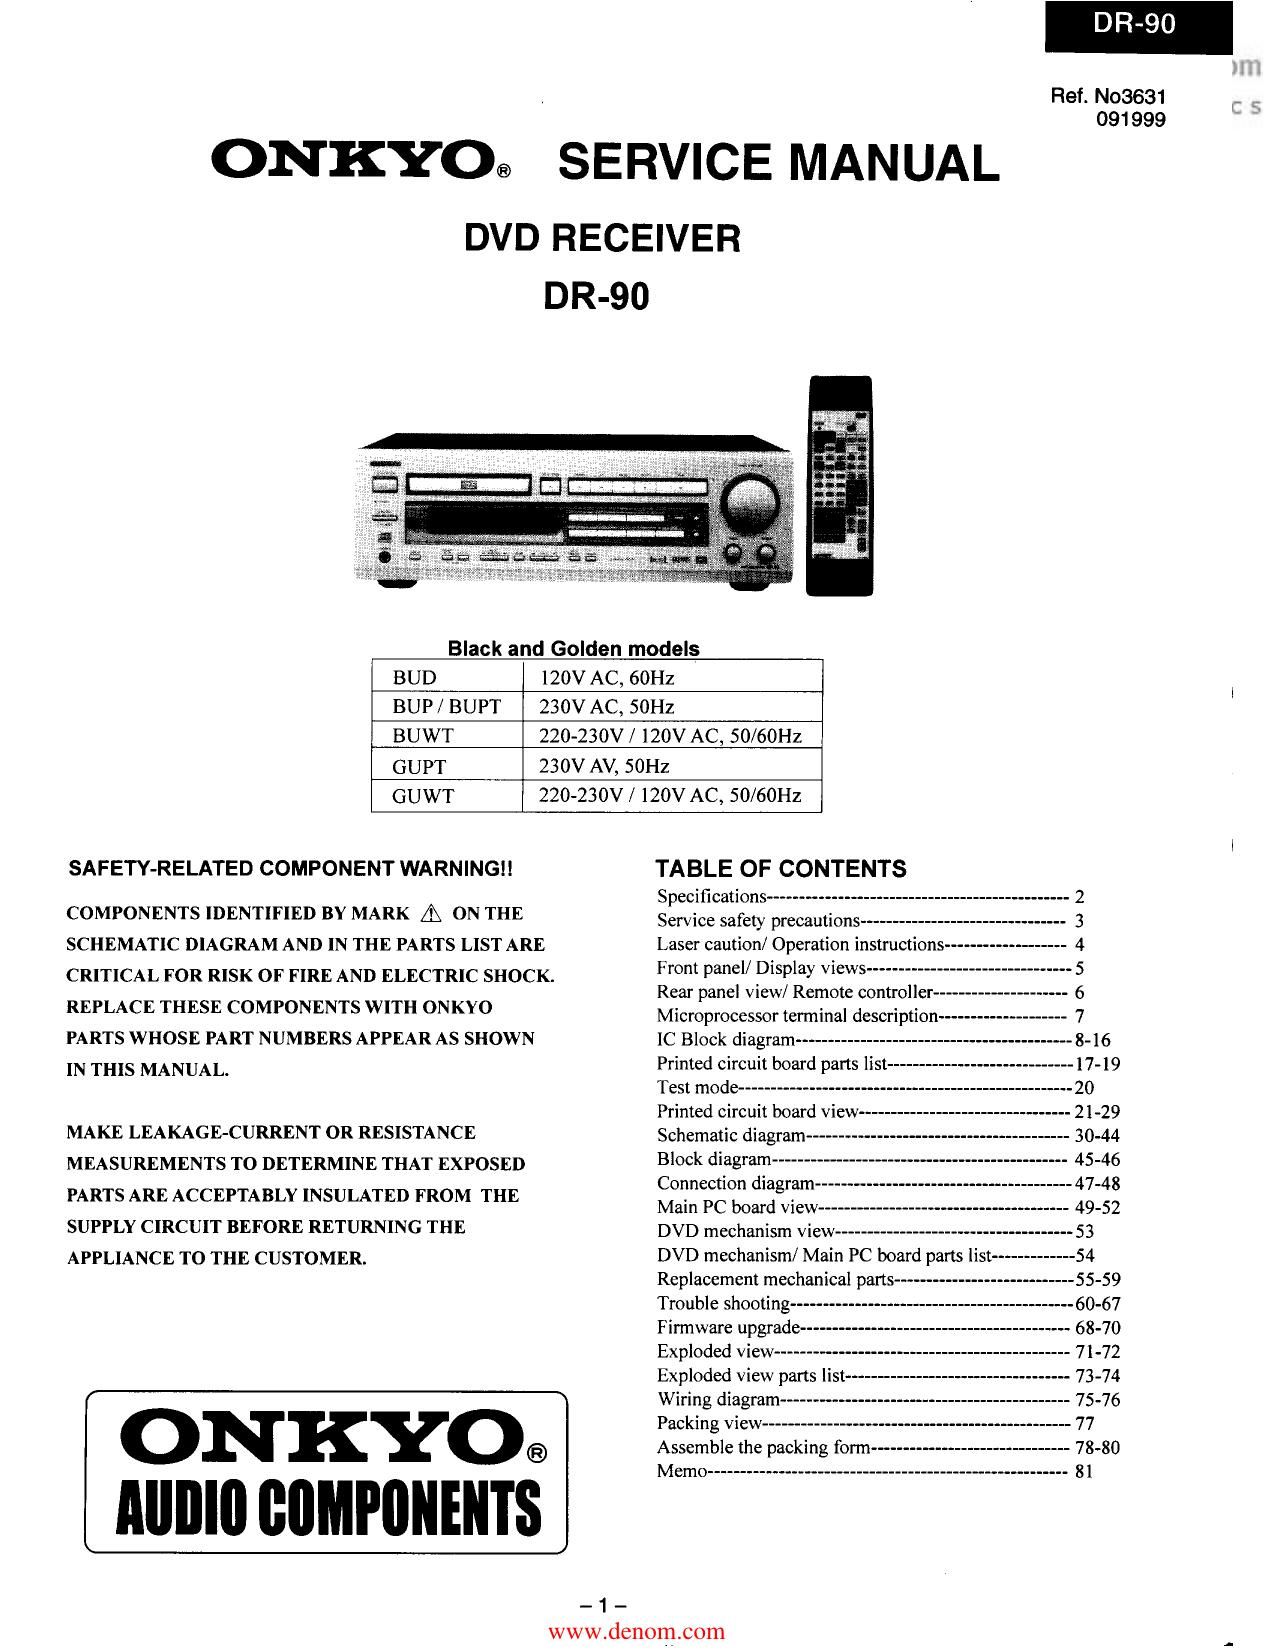 Onkyo DR 90 Service Manual